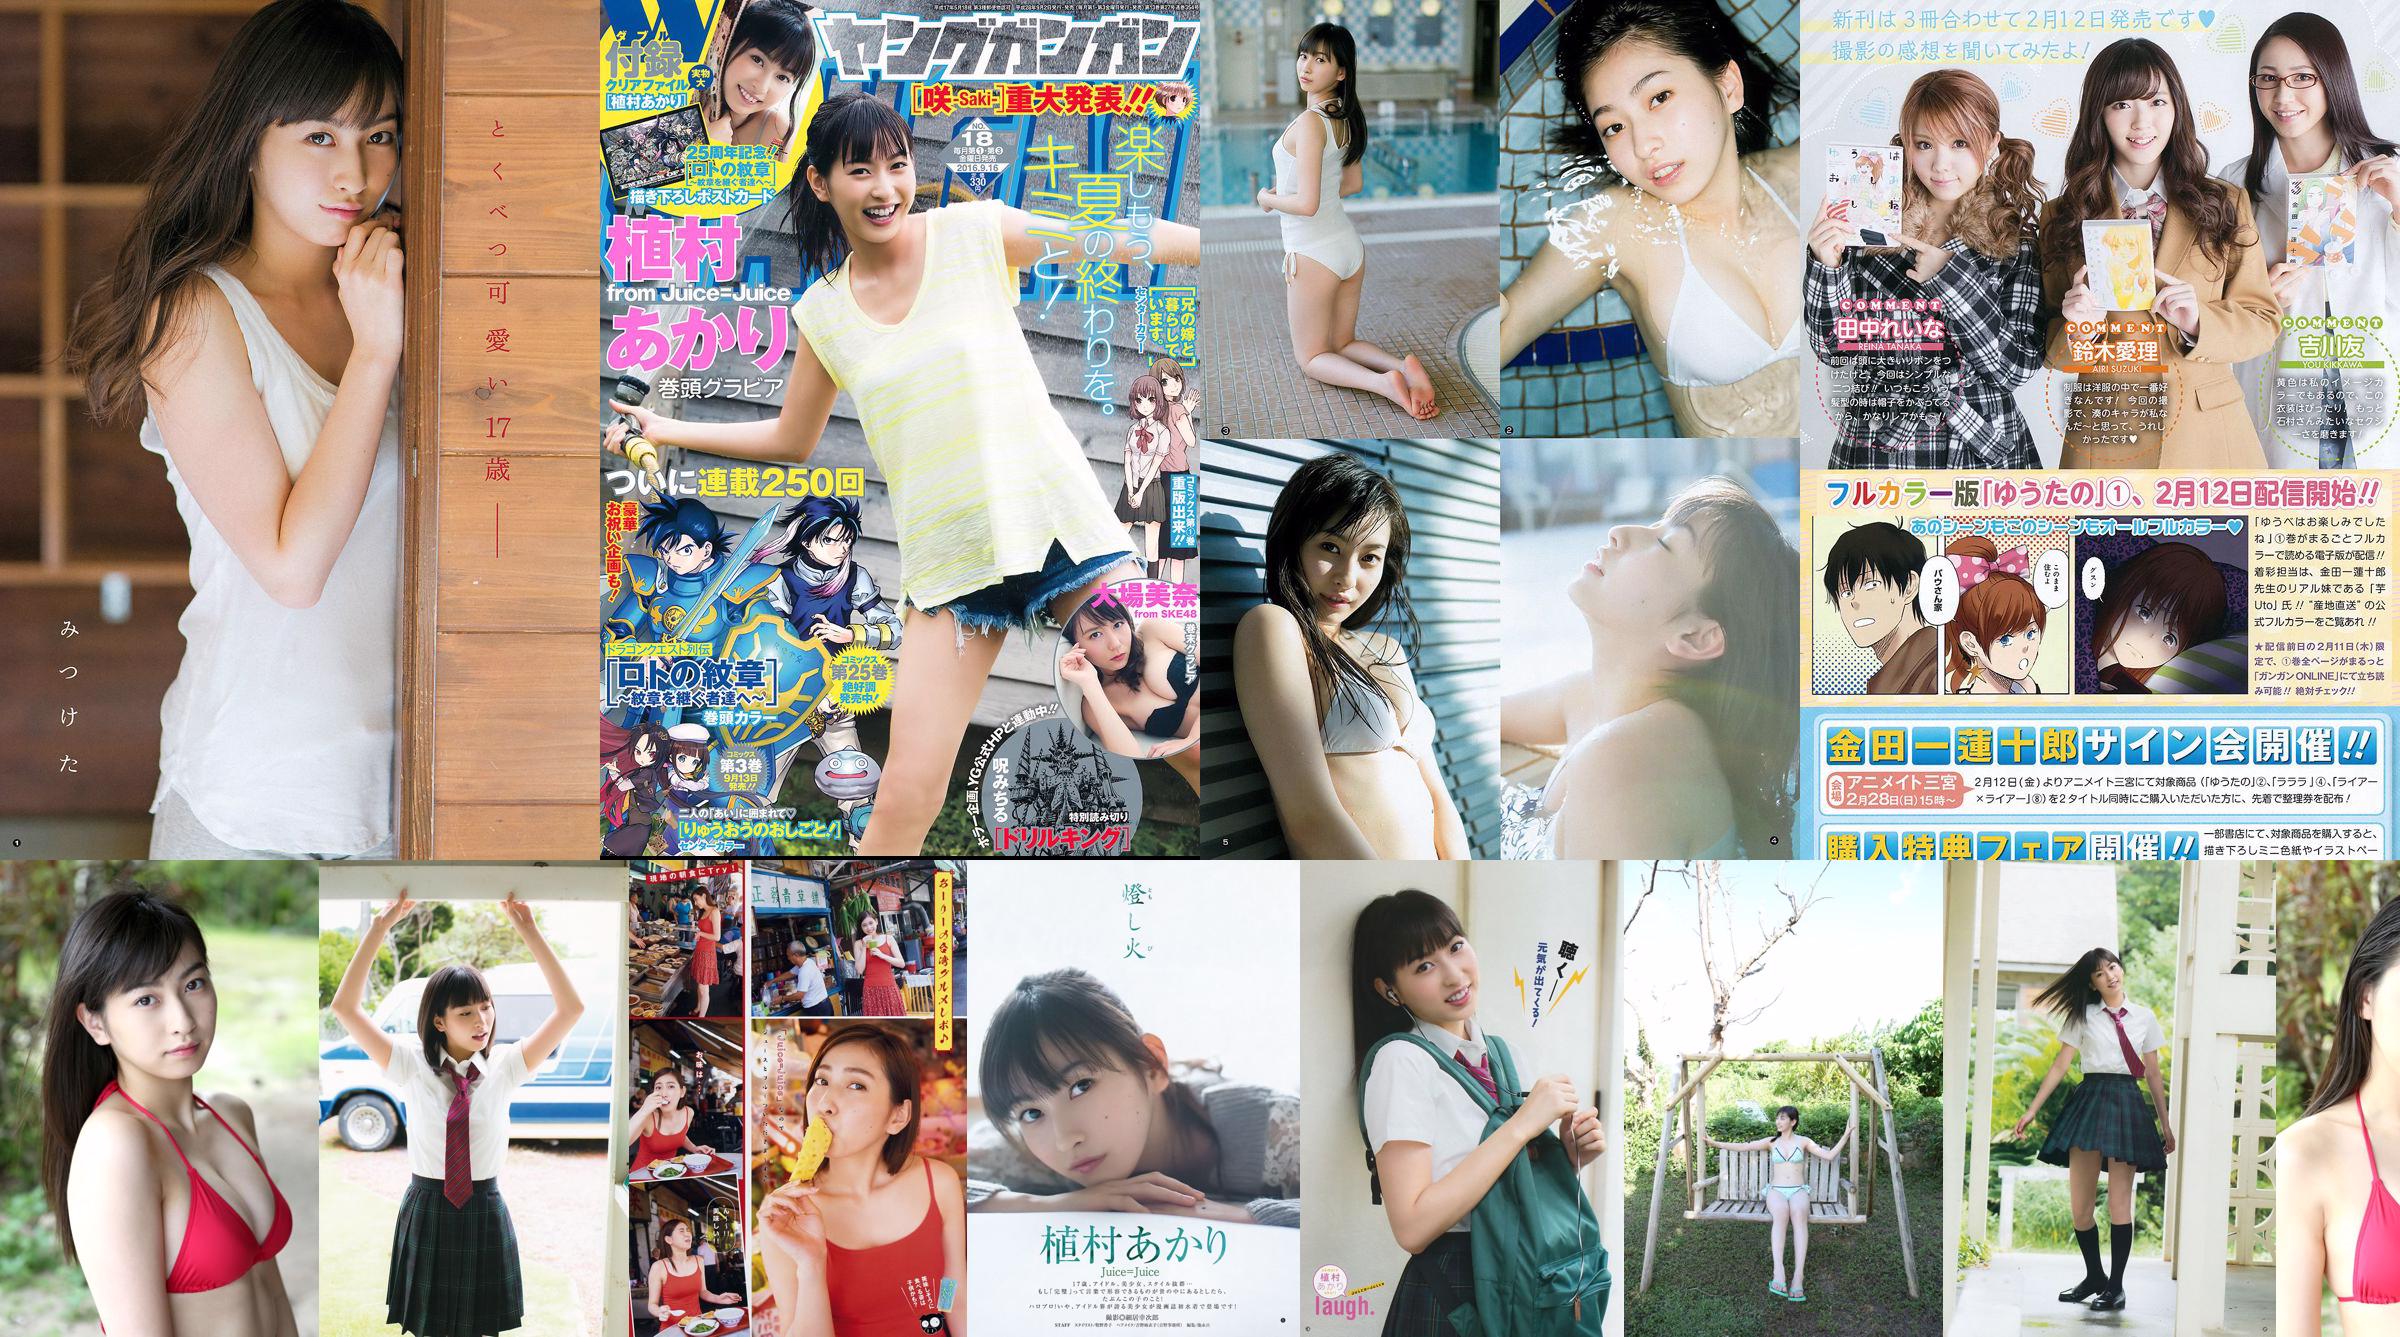 [Młody magazyn] Akari Uemura Yume Hayashi 2018 nr 31 Zdjęcie No.79af2f Strona 1